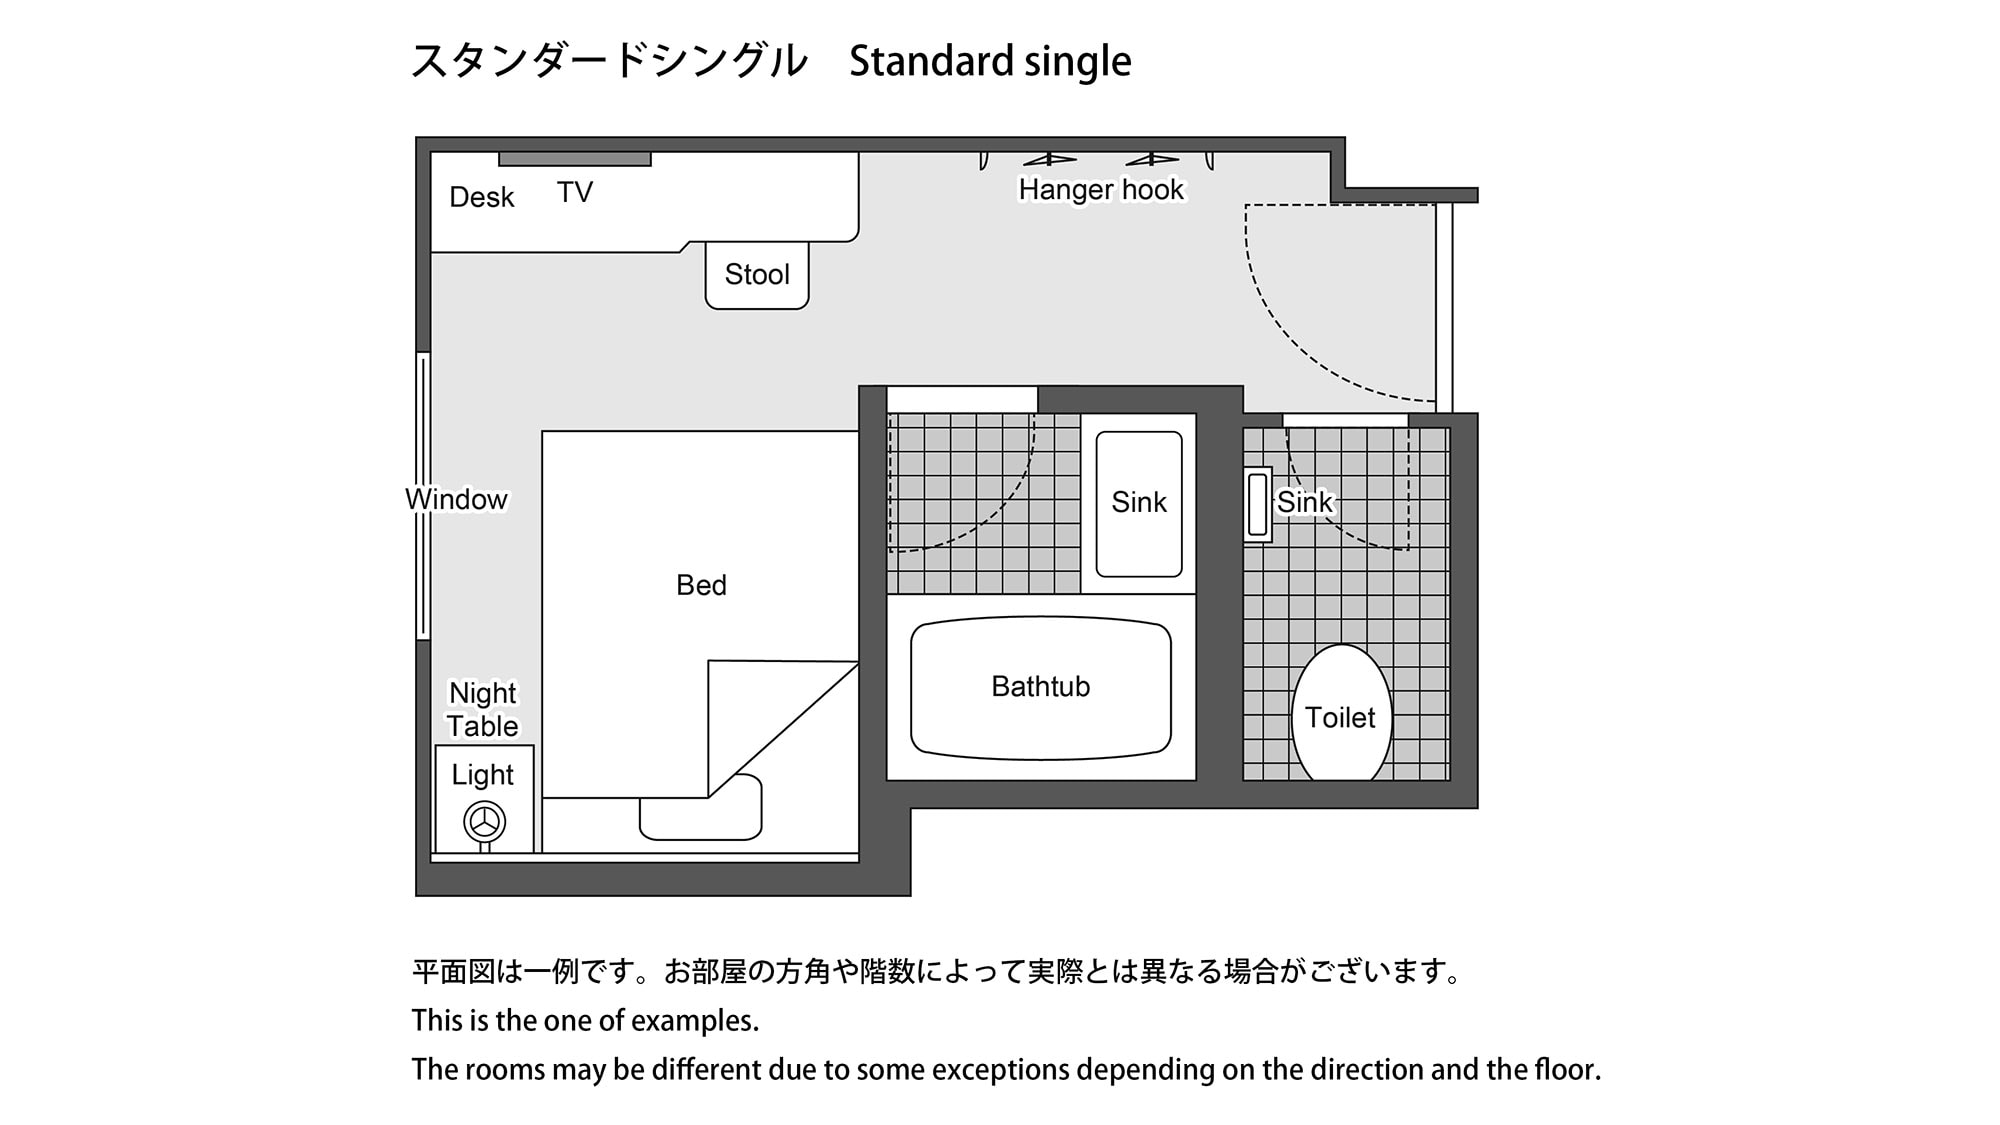 Standard single plan view image